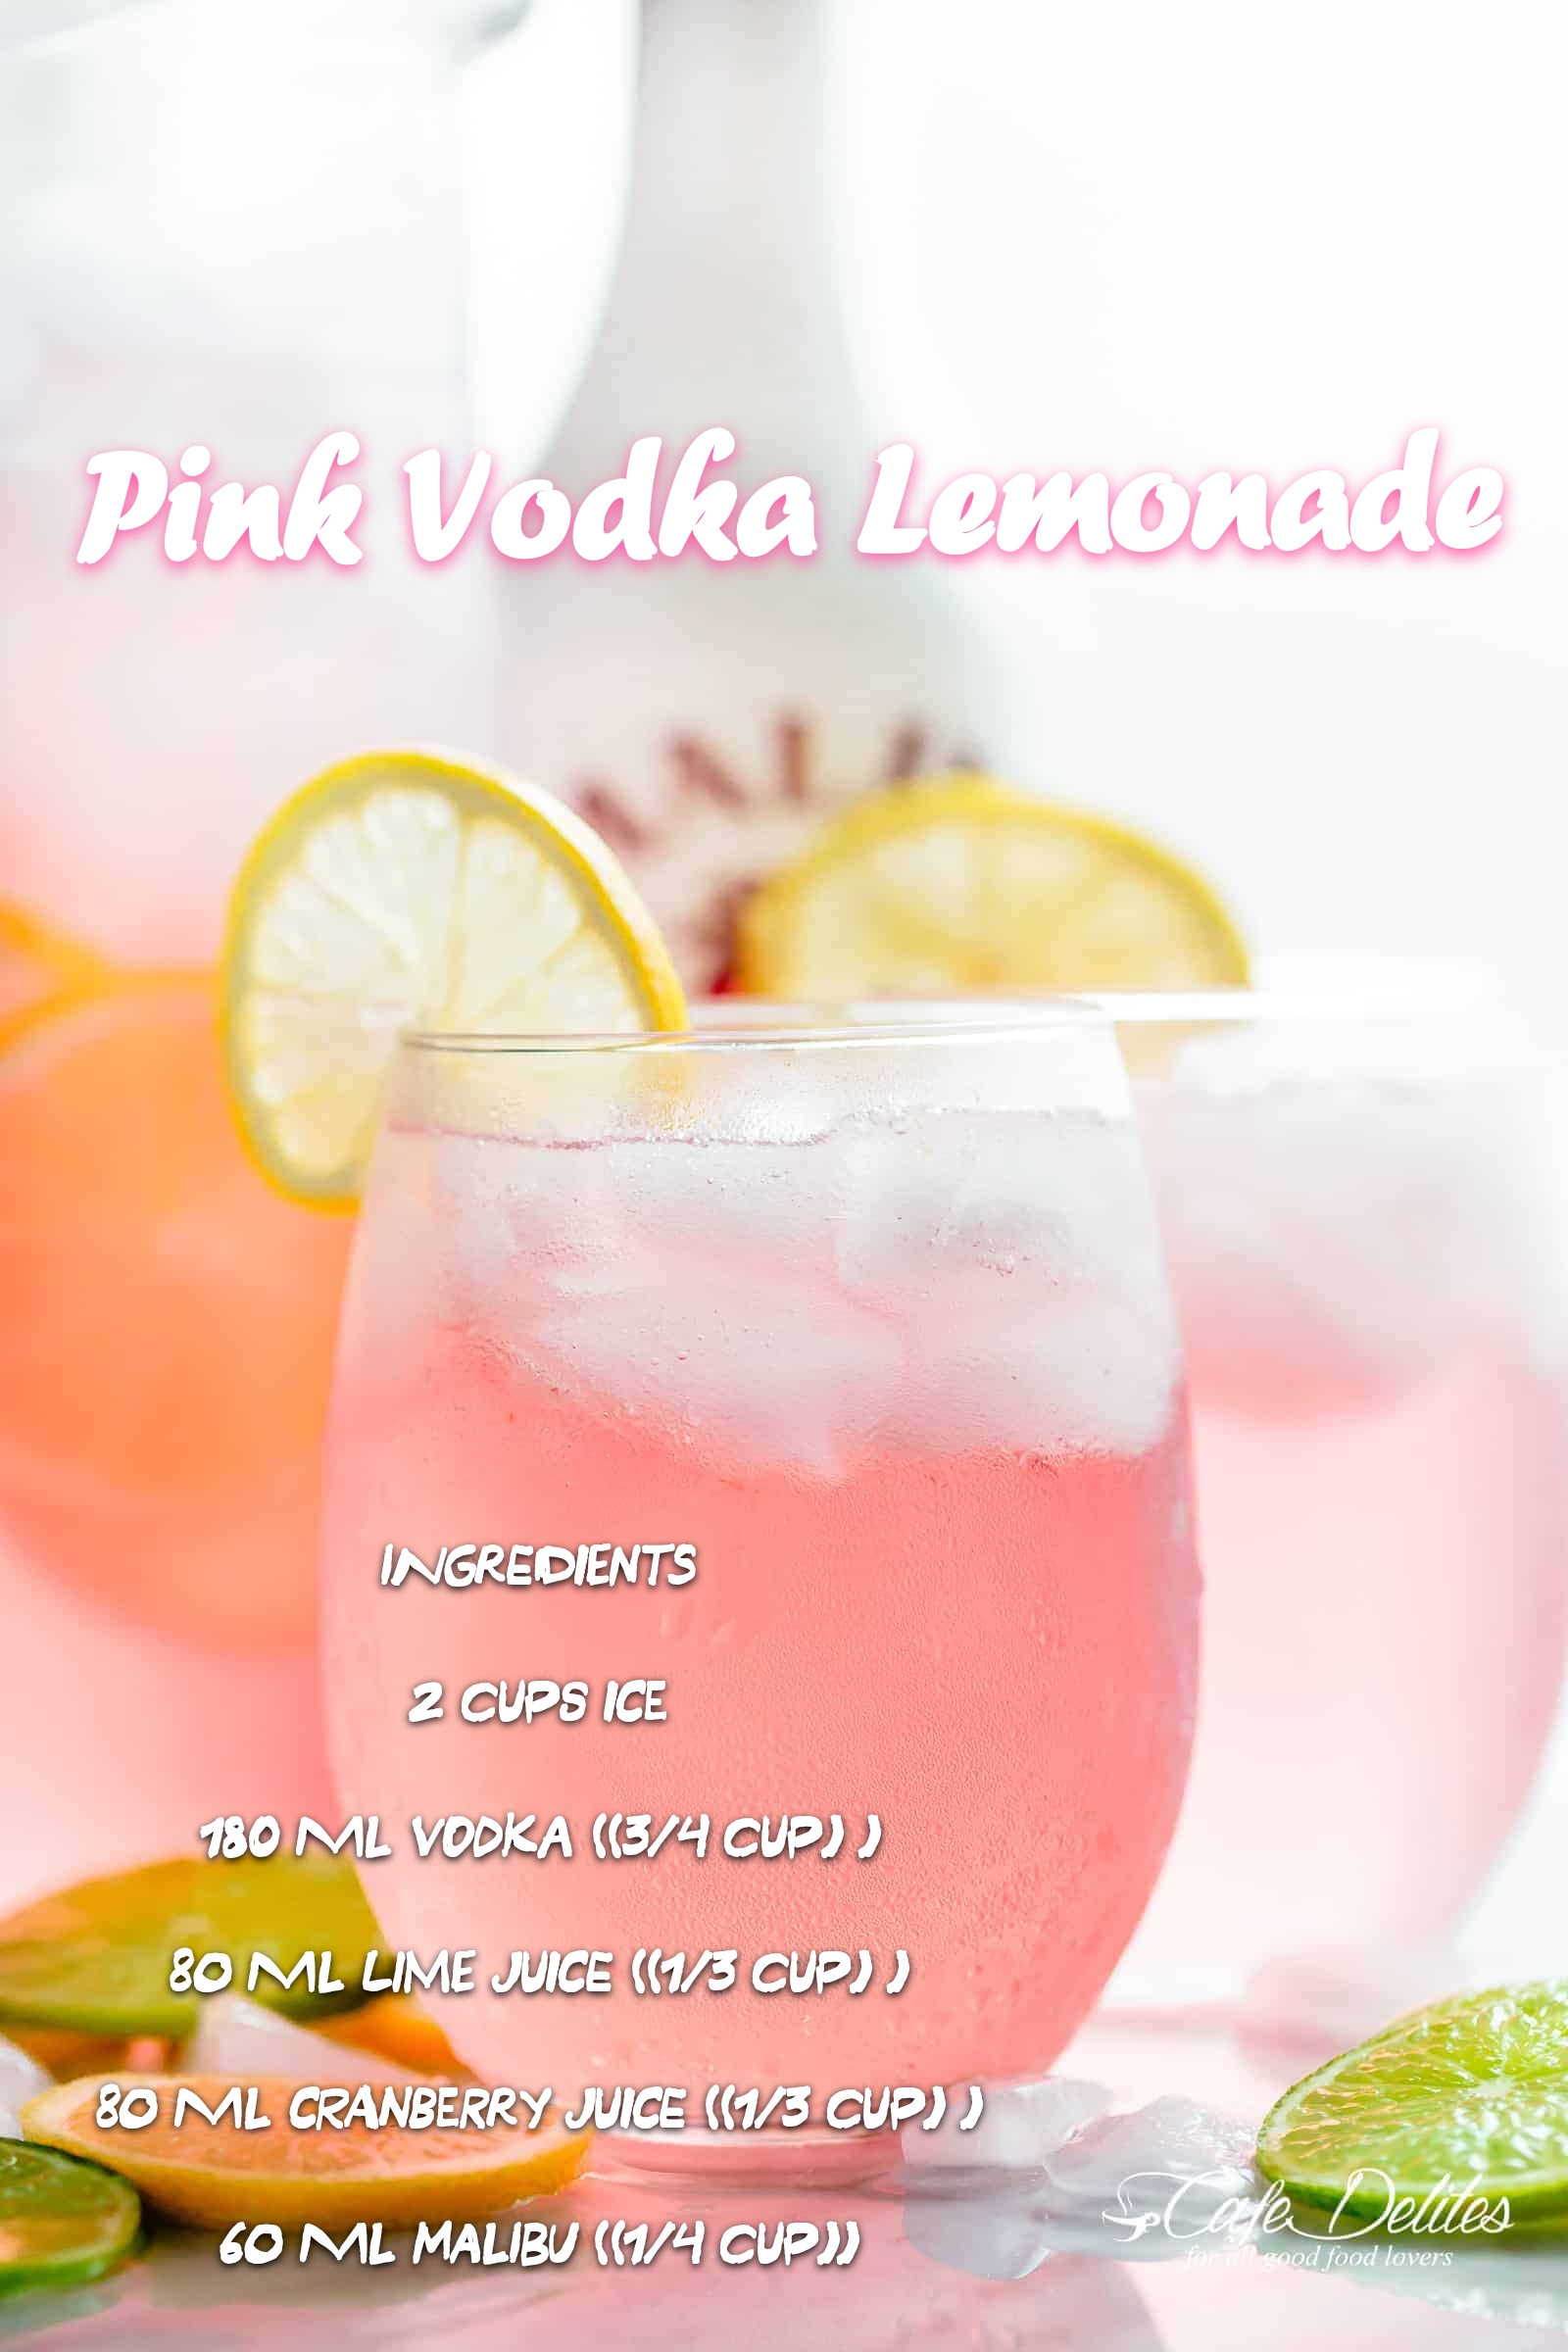 Pink-Vodka-Lemonade-IMAGE-3_mh1616479306071.jpg